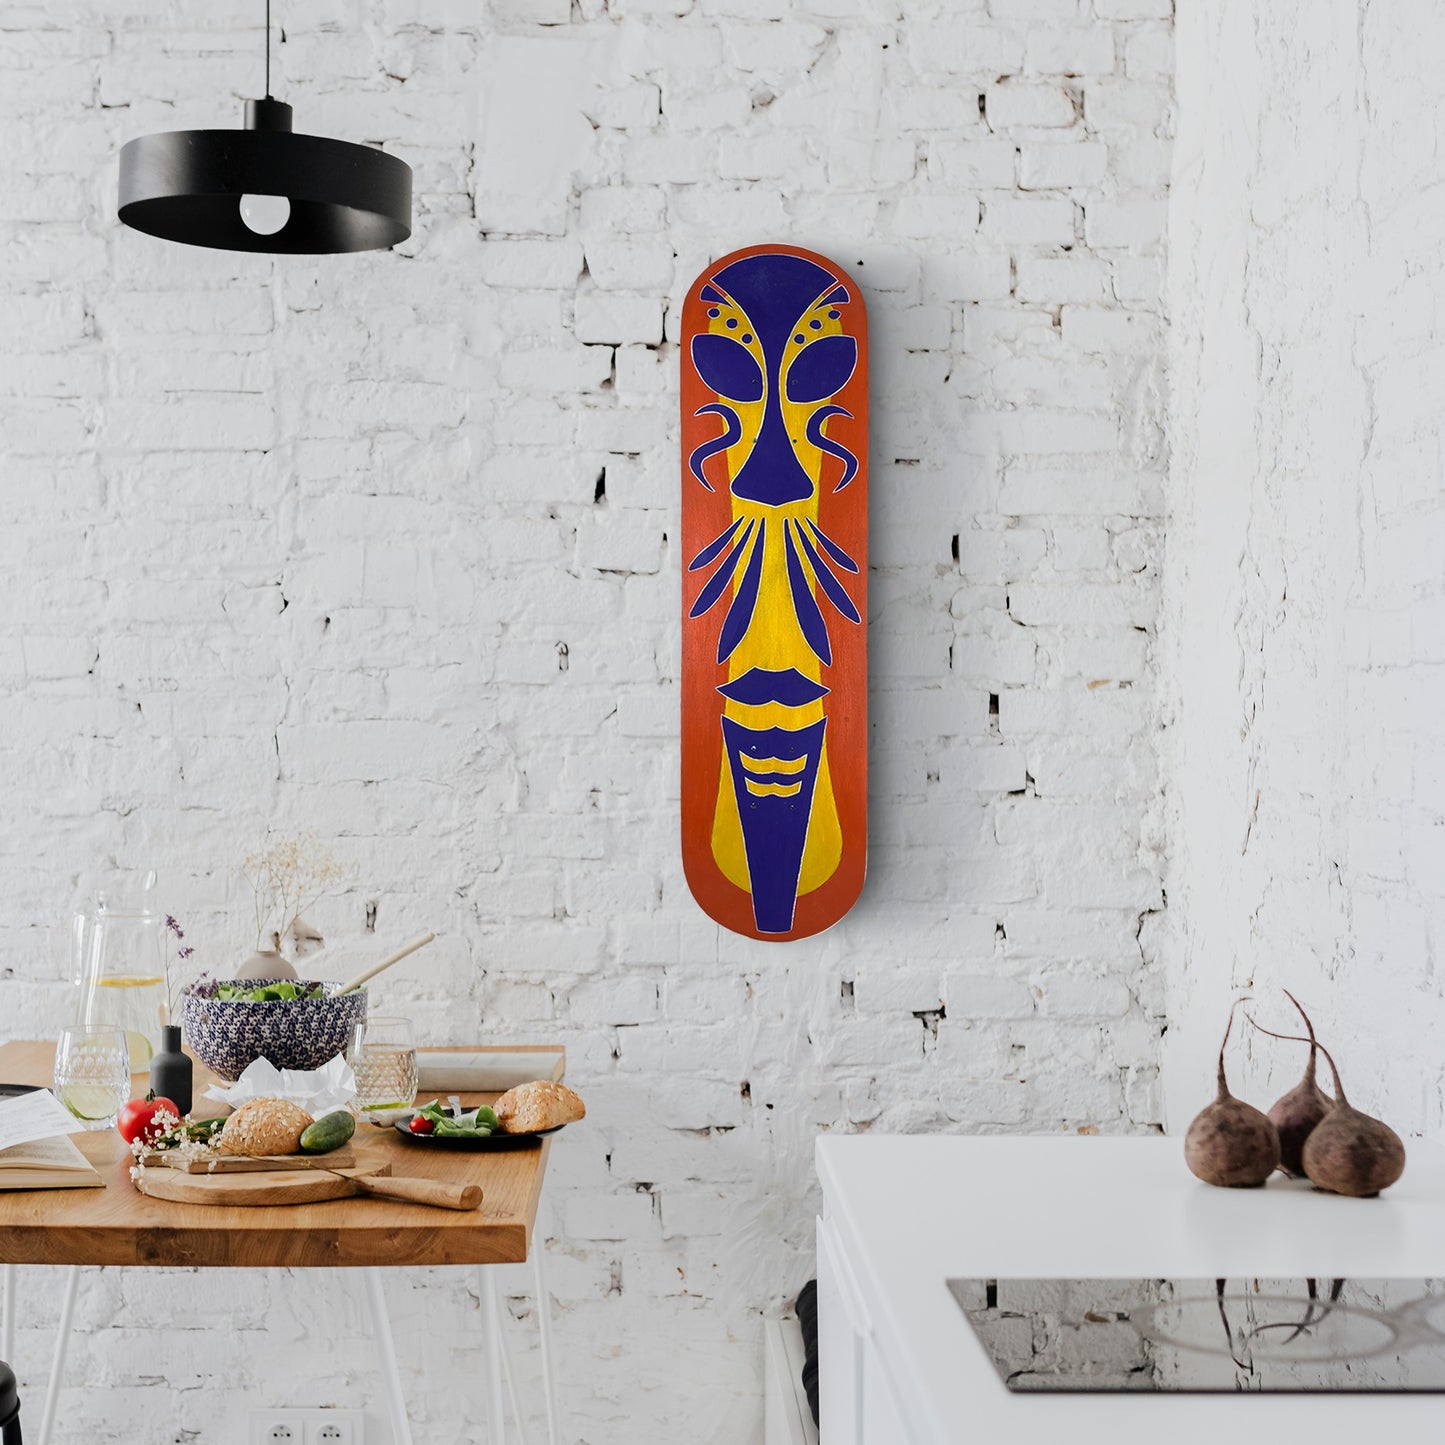 Skateboard Wall Art, "African Mask" Hand-Painted Wall Decors